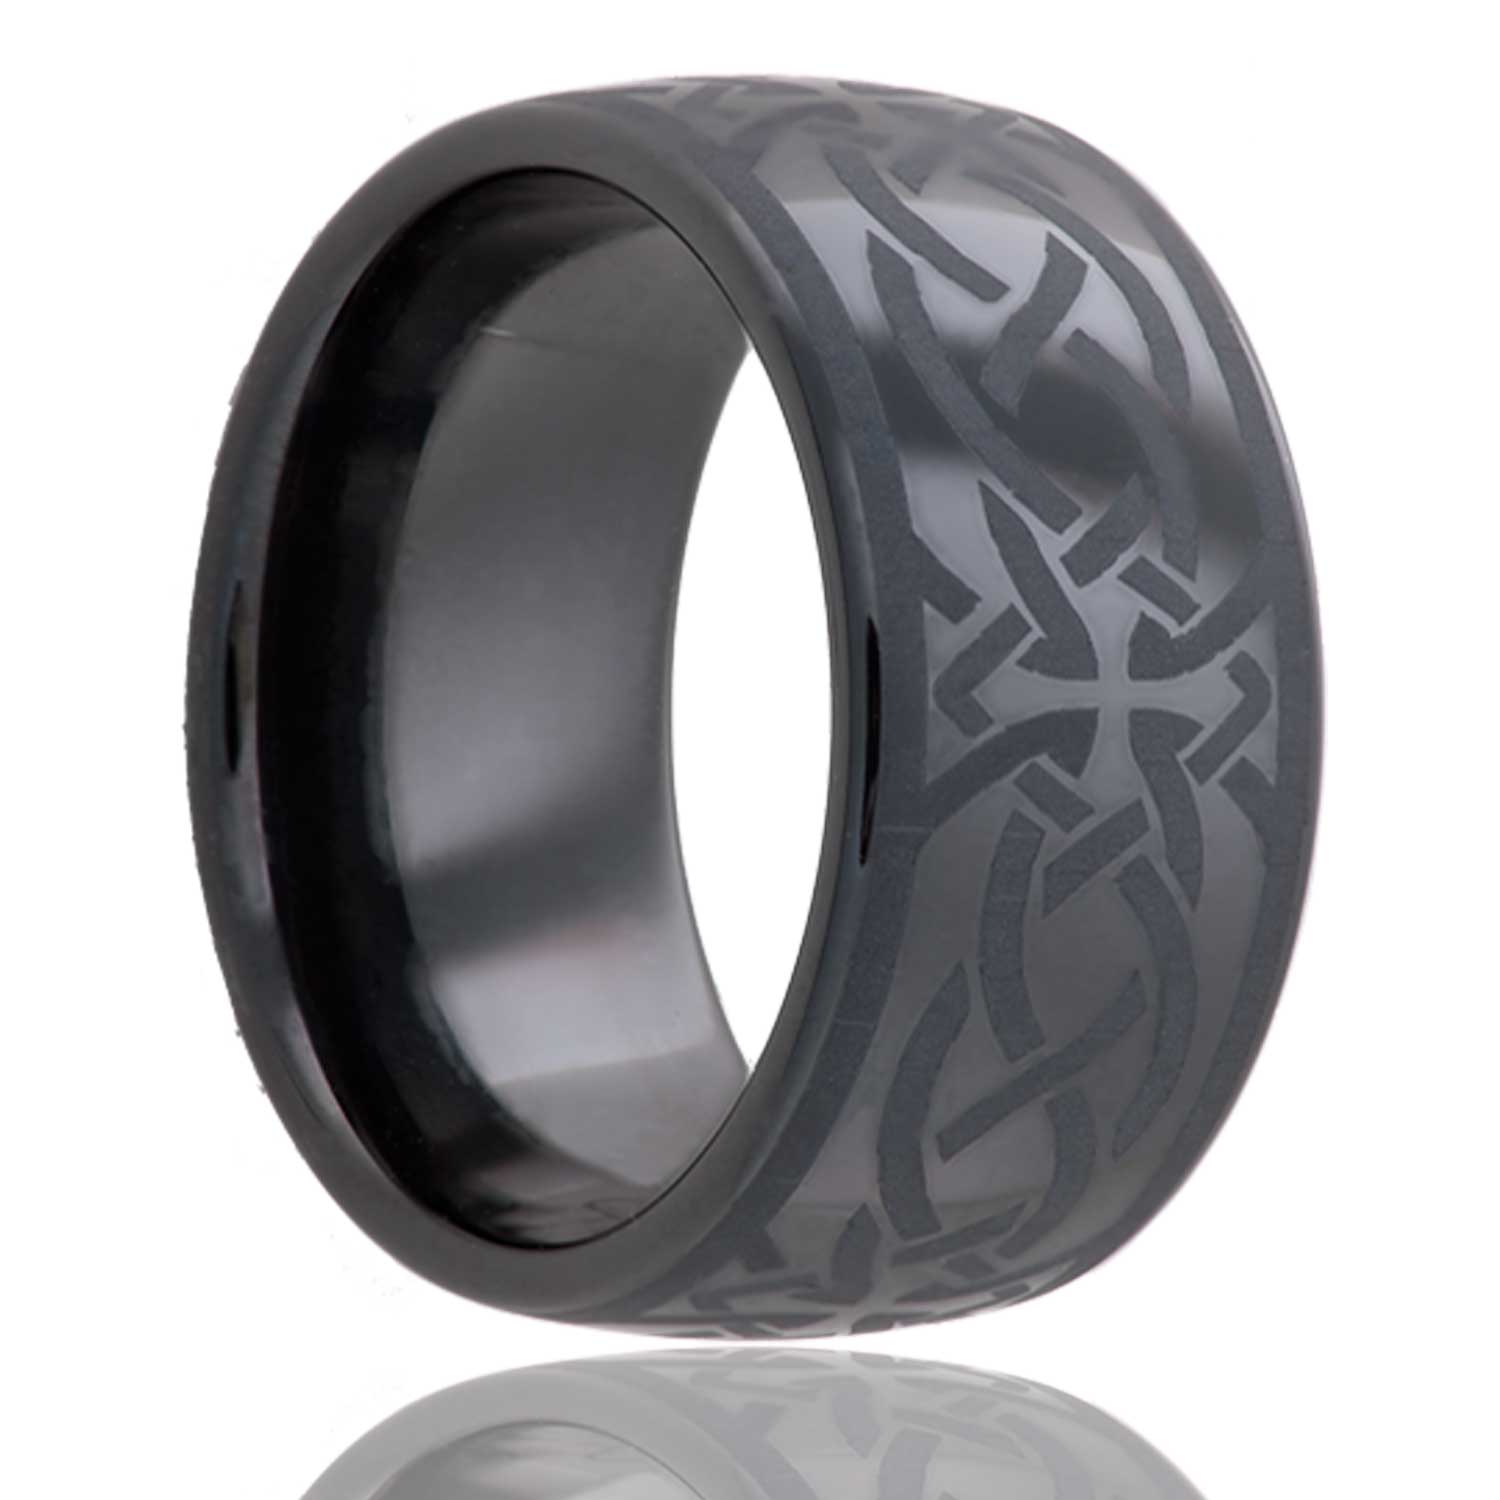 A celtic sailor's knot domed black black ceramic wedding band displayed on a neutral white background.